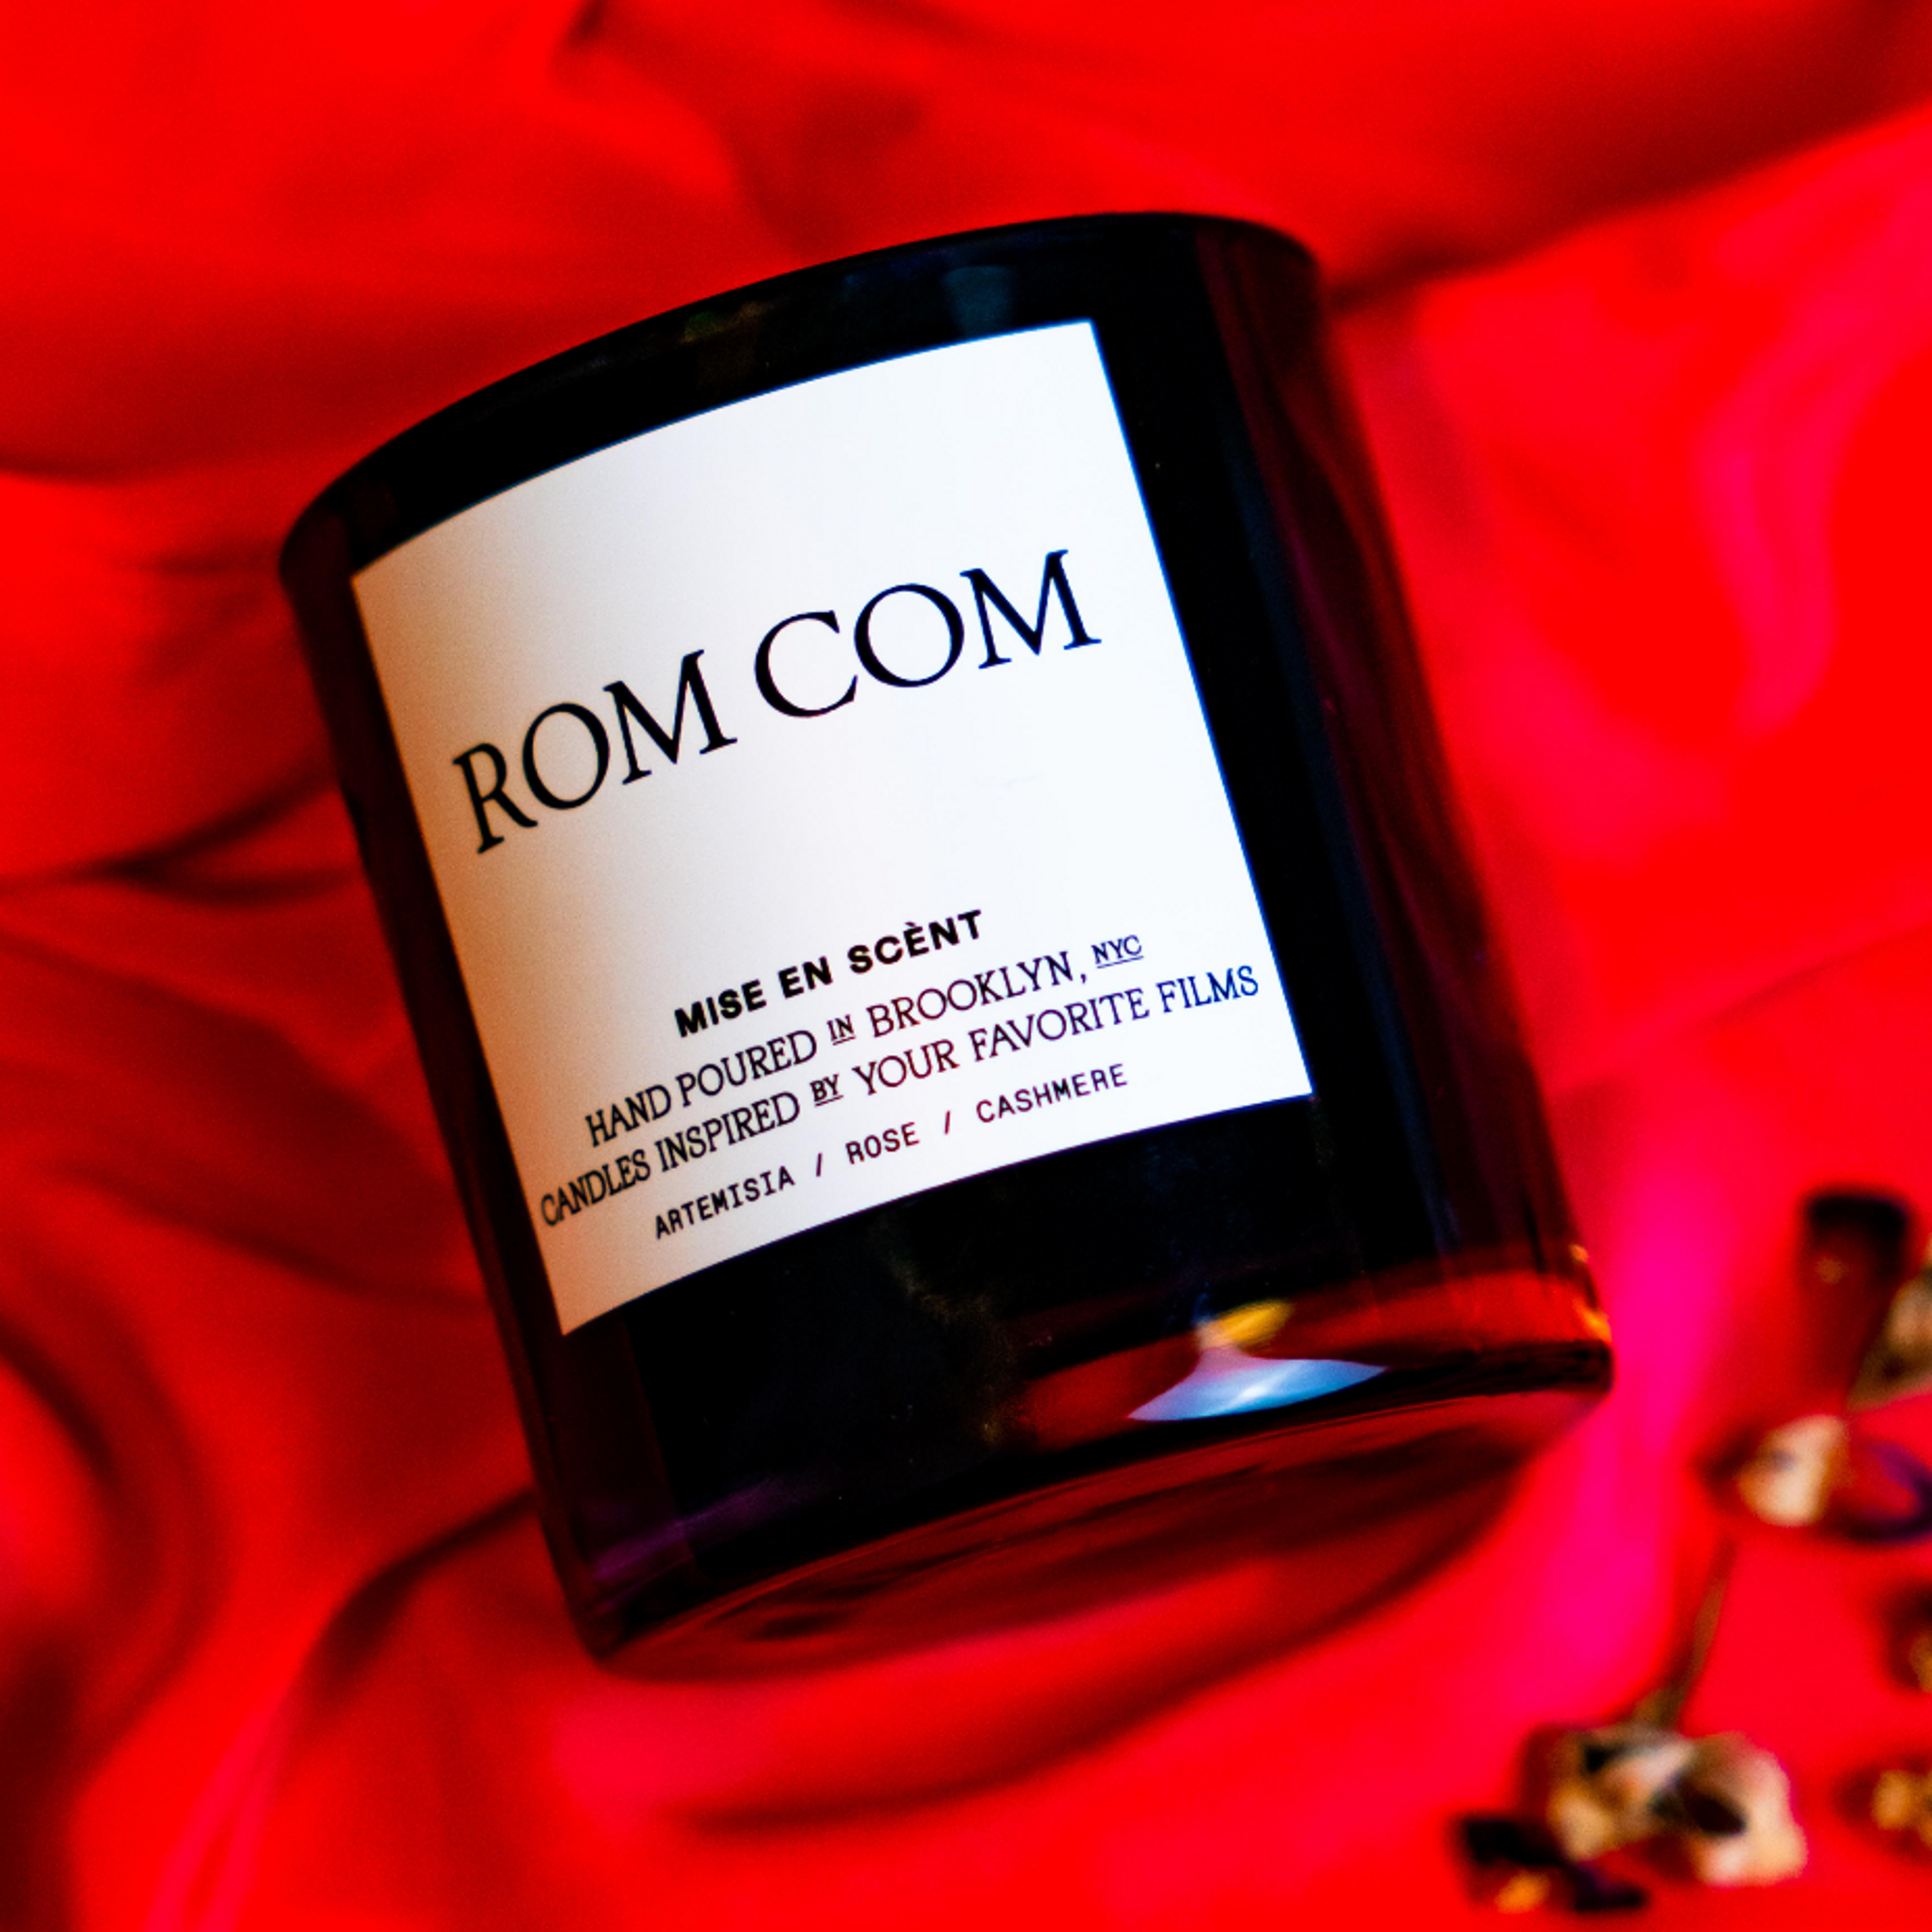 Rom Com Candle